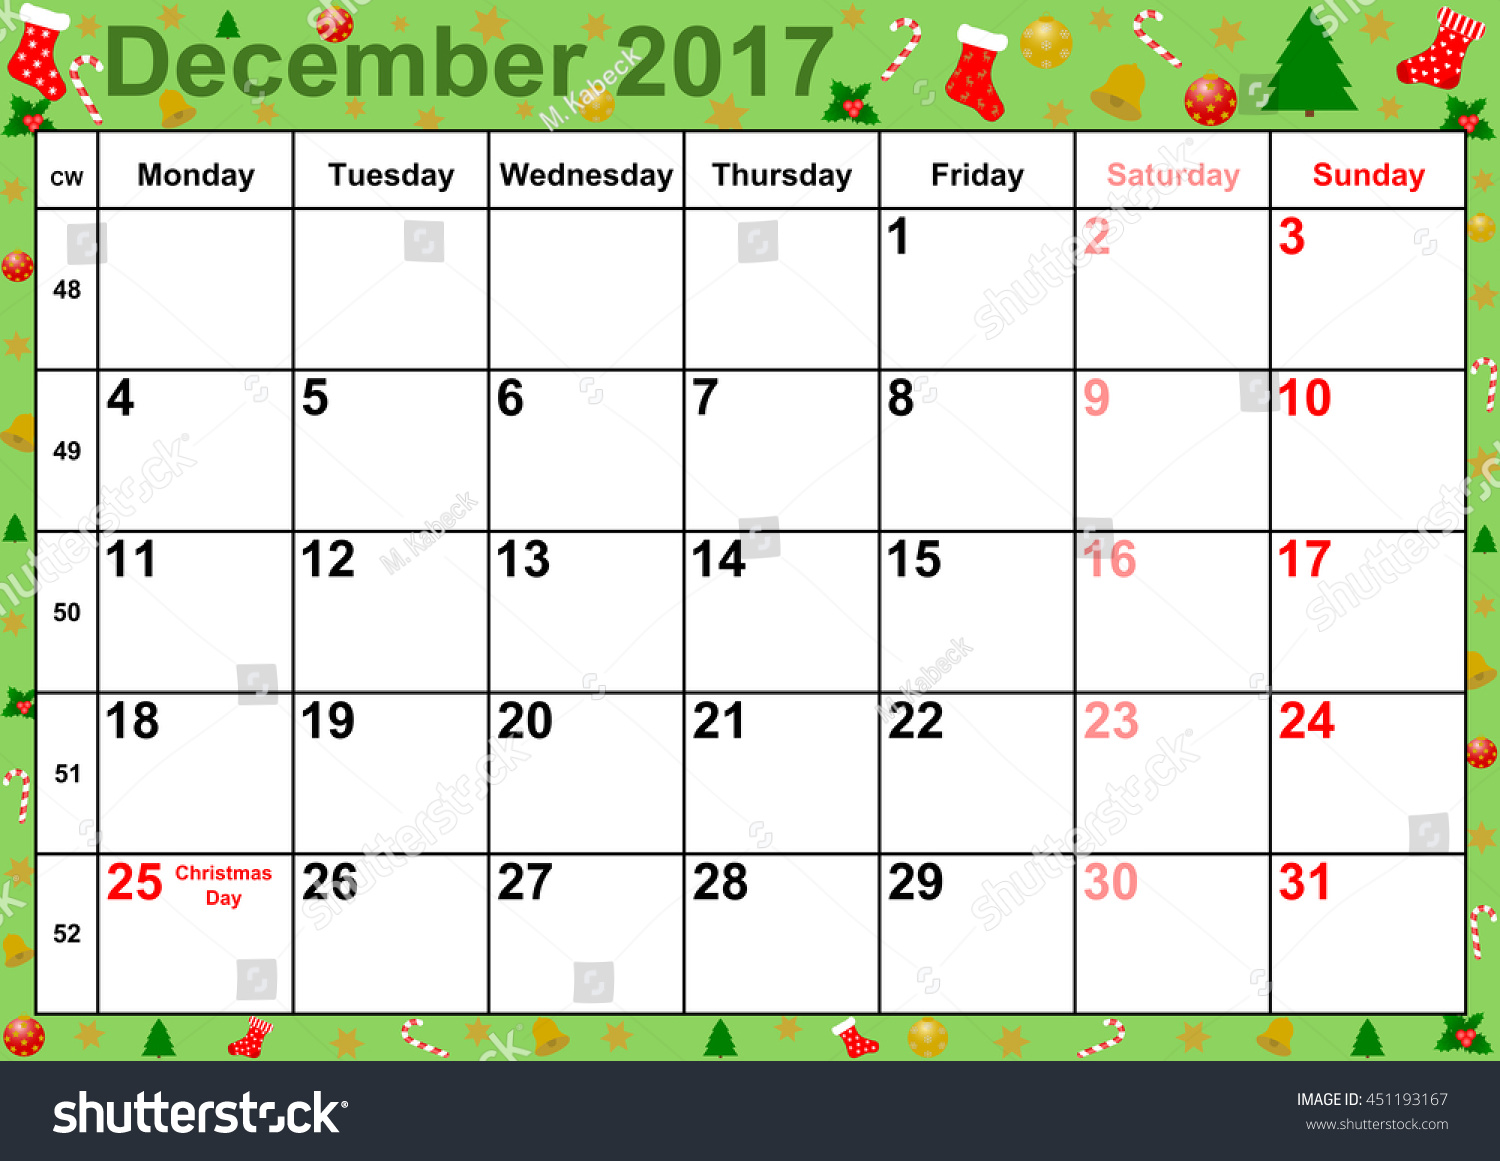 calendar-2017-months-december-holidays-us-stock-illustration-451193167-shutterstock